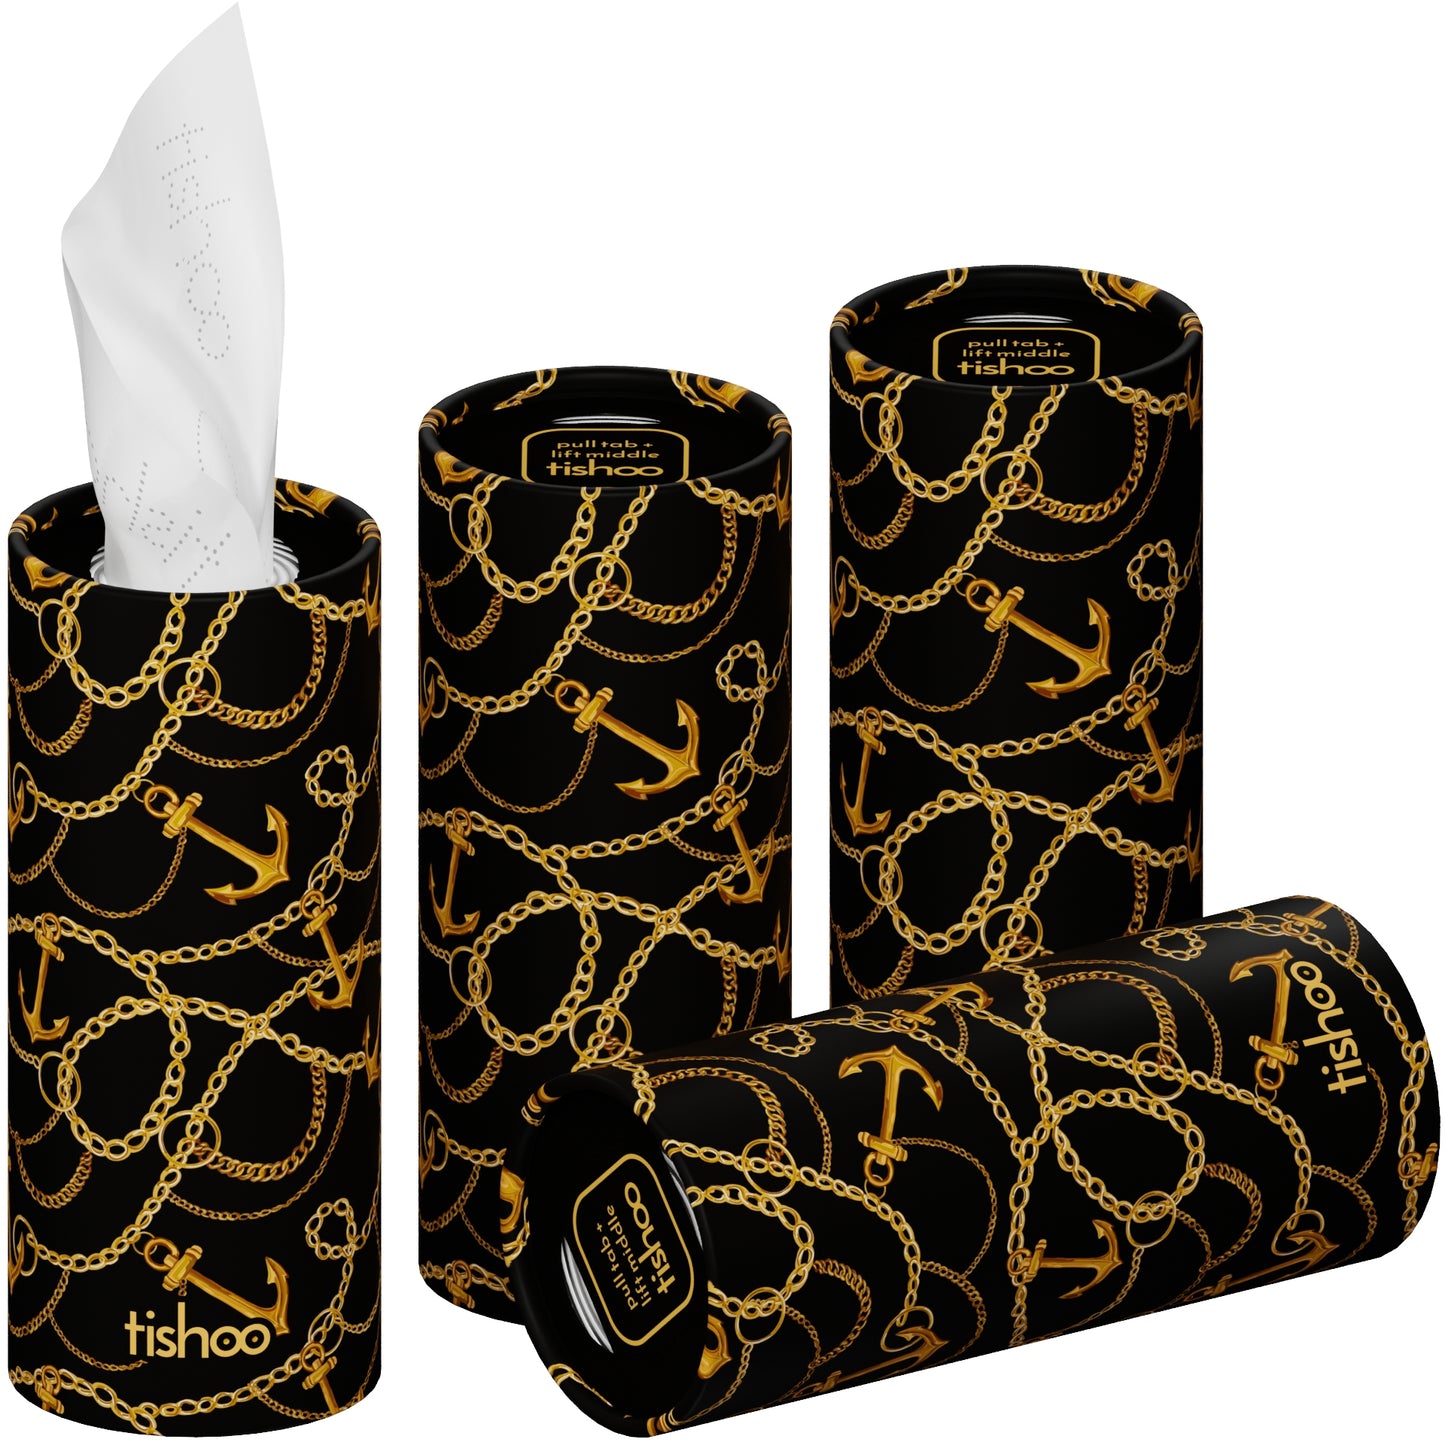 tishoo Luxury Tissues Black/Chains 4 tubes